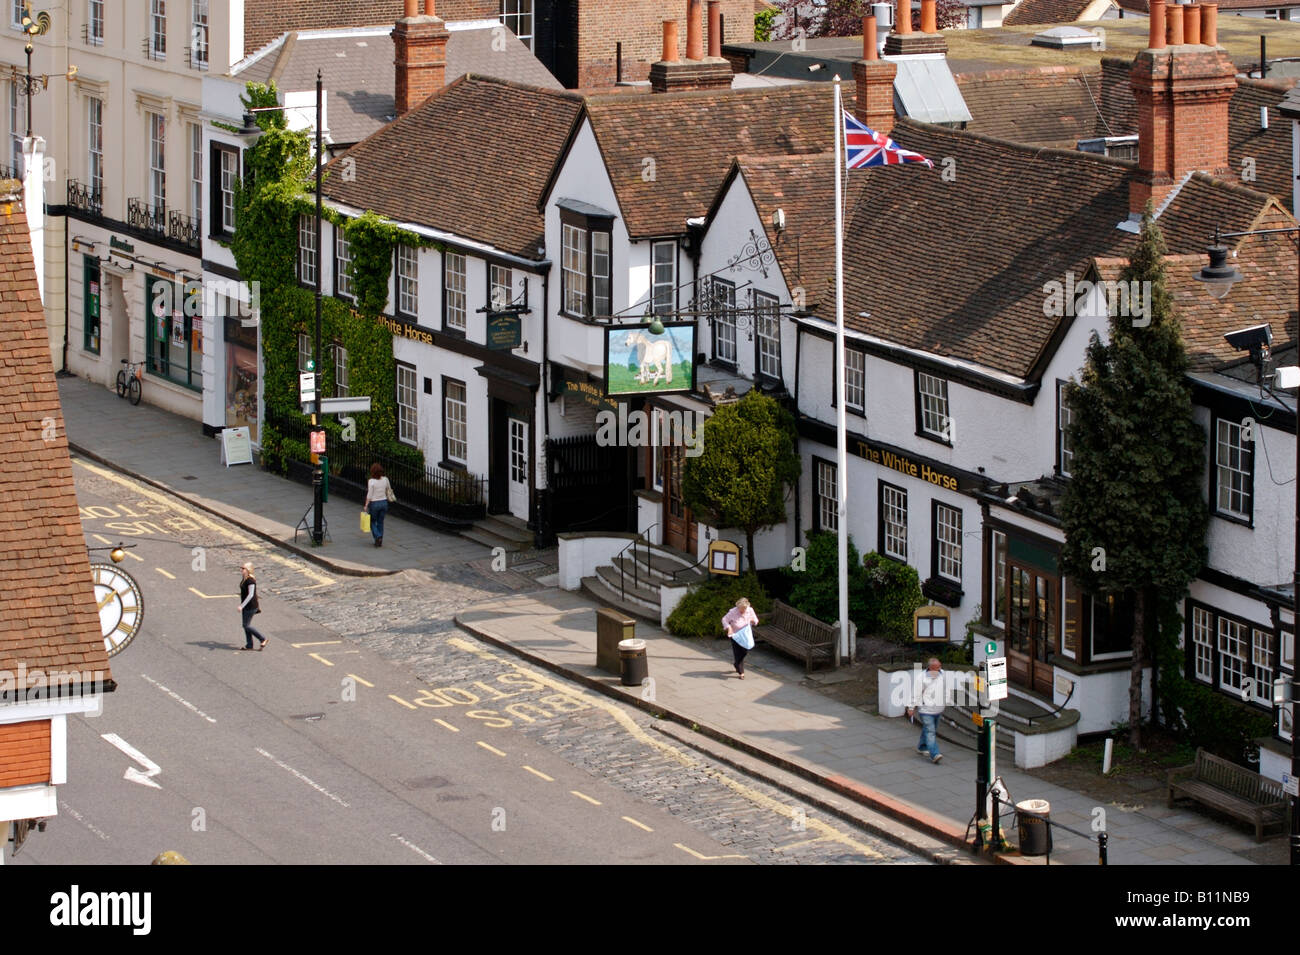 The White Horse Hotel, High Street, Dorking, Surrey, England, UK Stock Photo